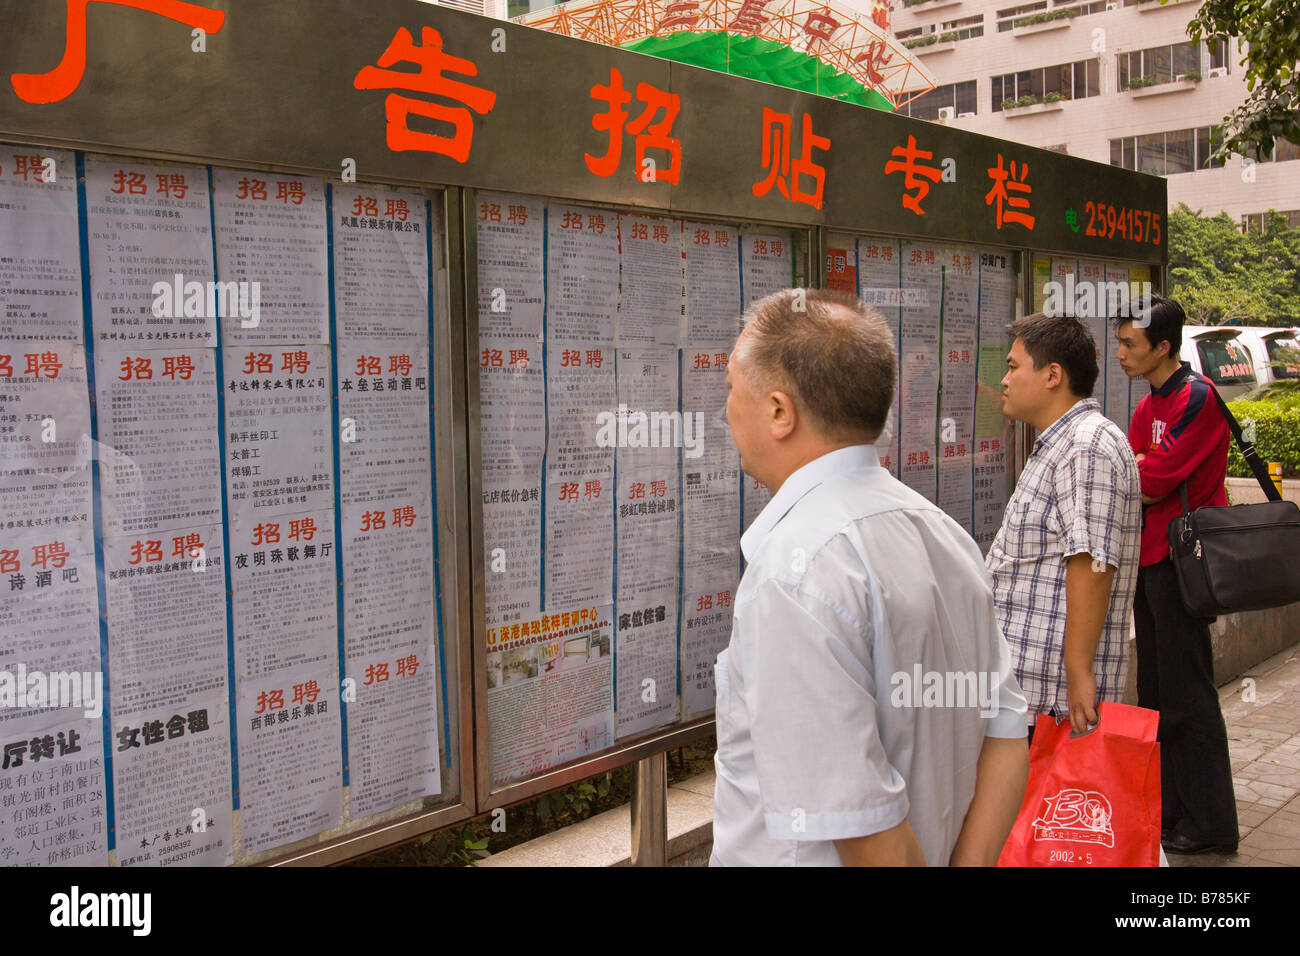 SHENZHEN GUANGDONG PROVINCE CHINA city of Shenzhen Stock Photo